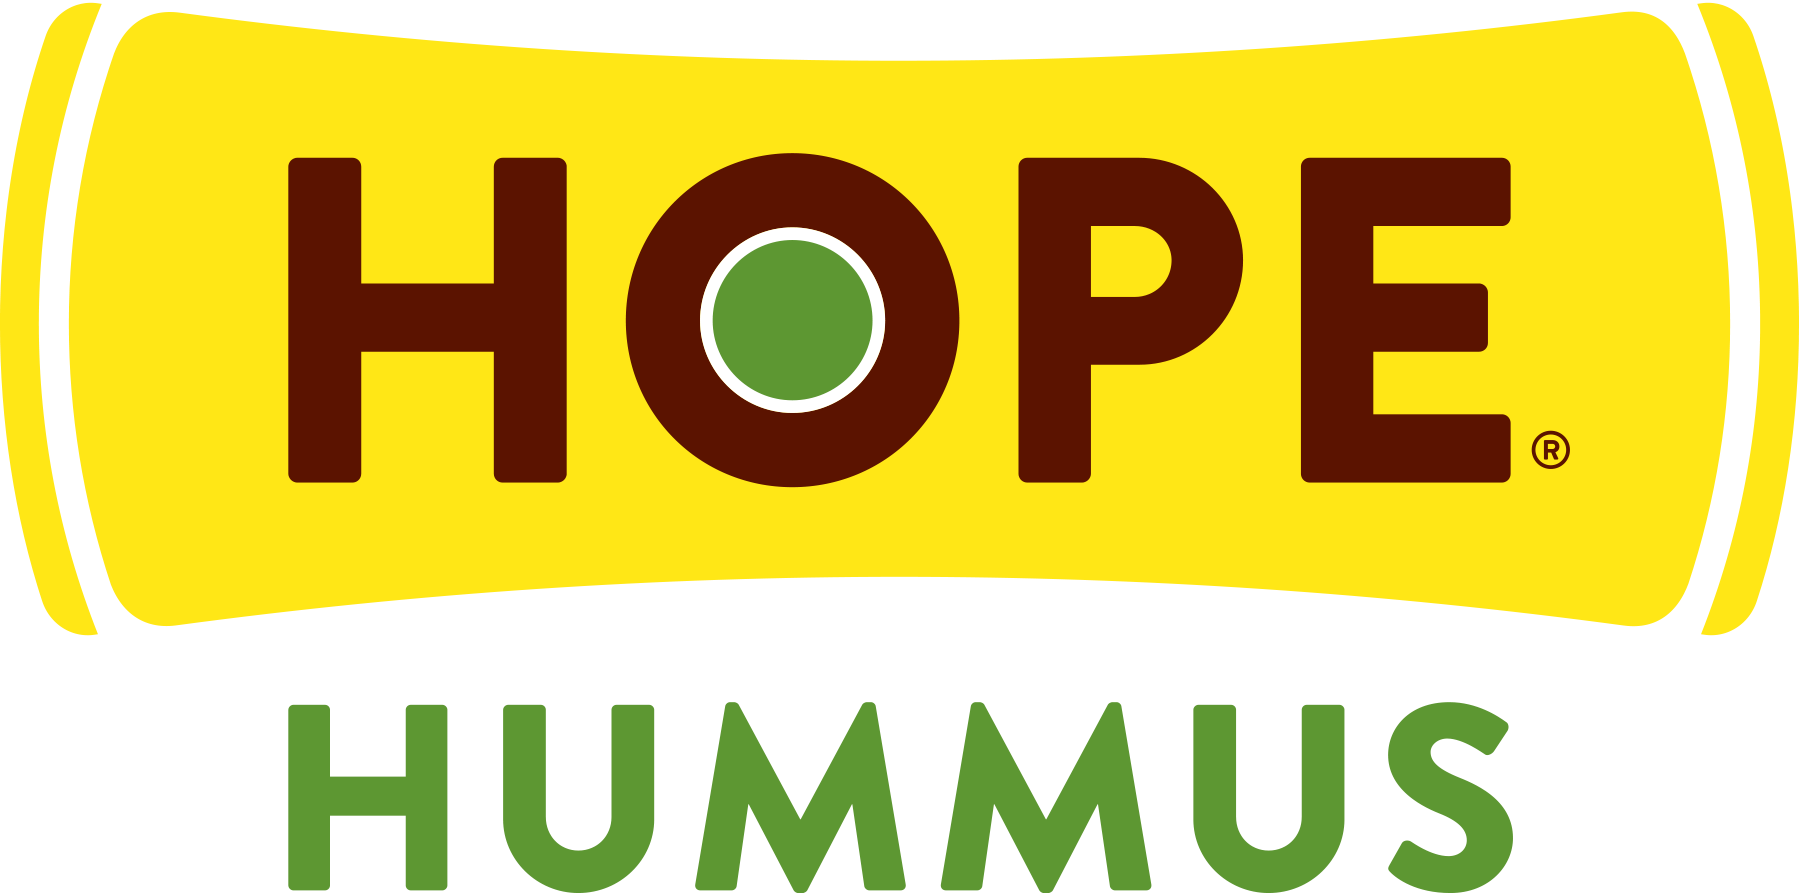 HOPE badge green hummus.png